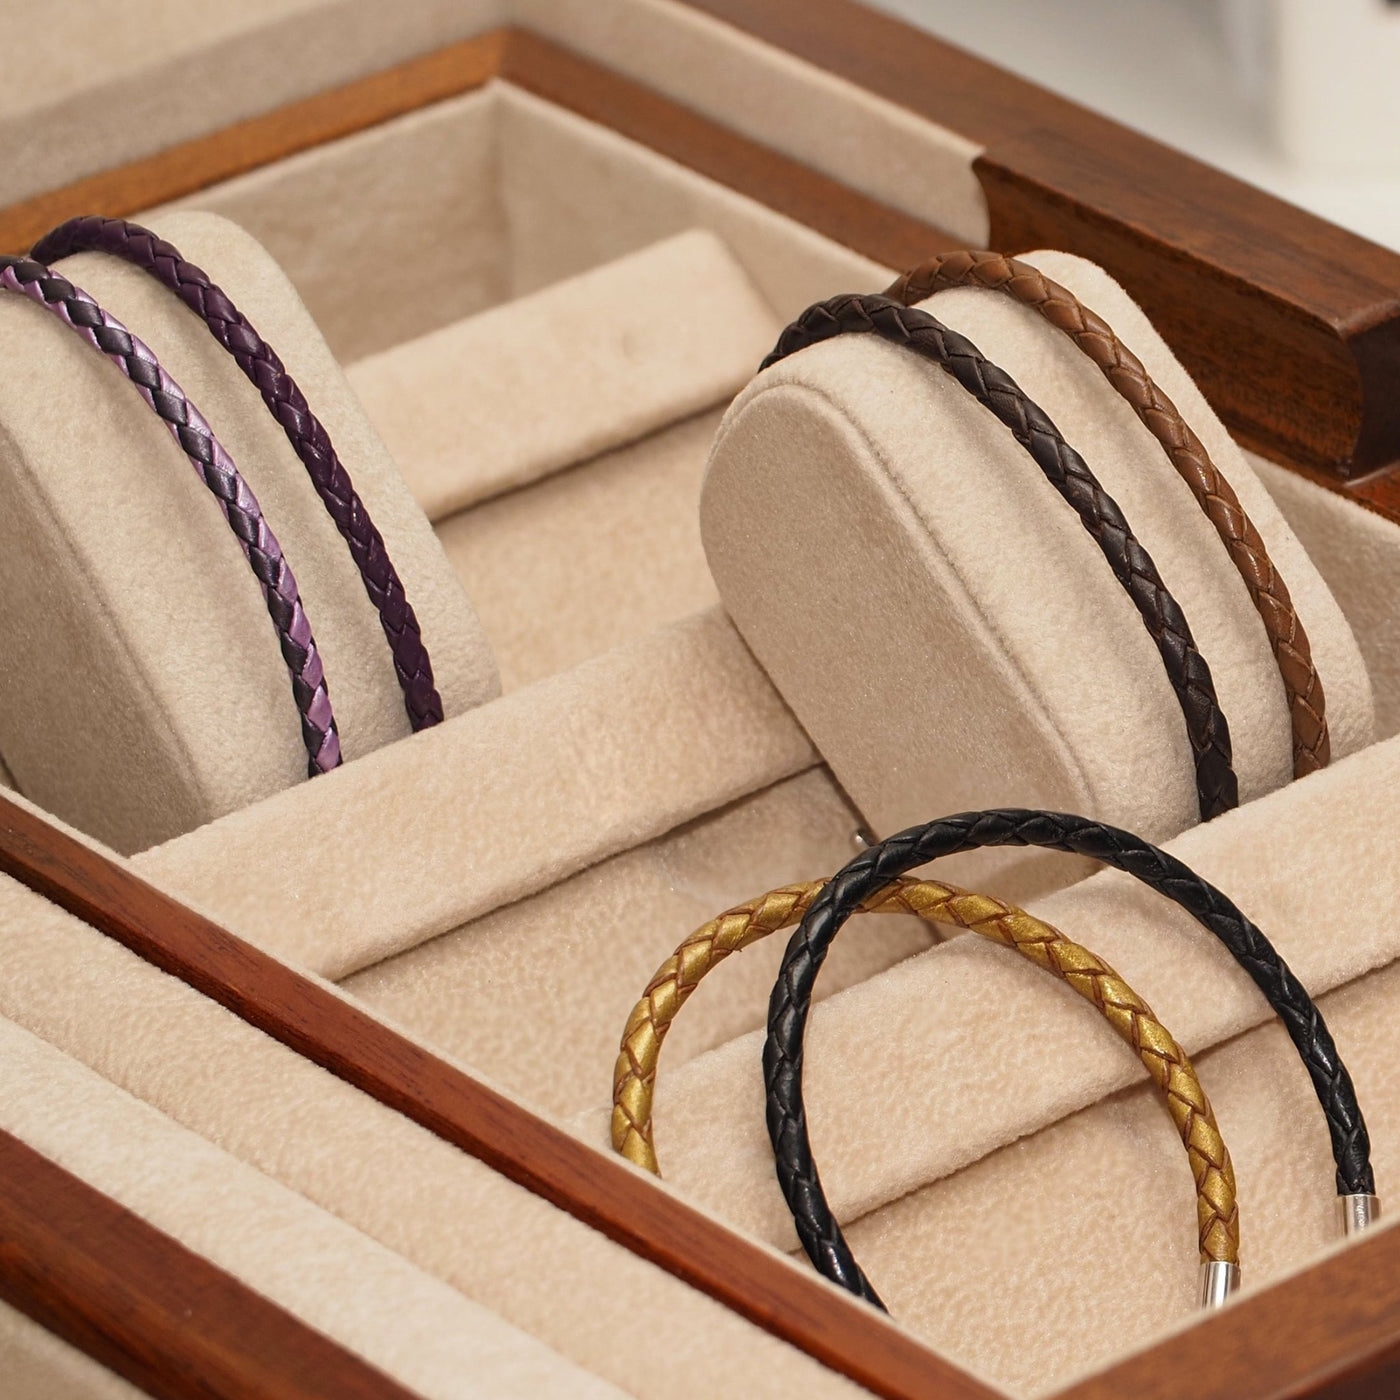 Gold Leather Bracelet - Medium | For wrist 15.8 - 18cm - Bracelet